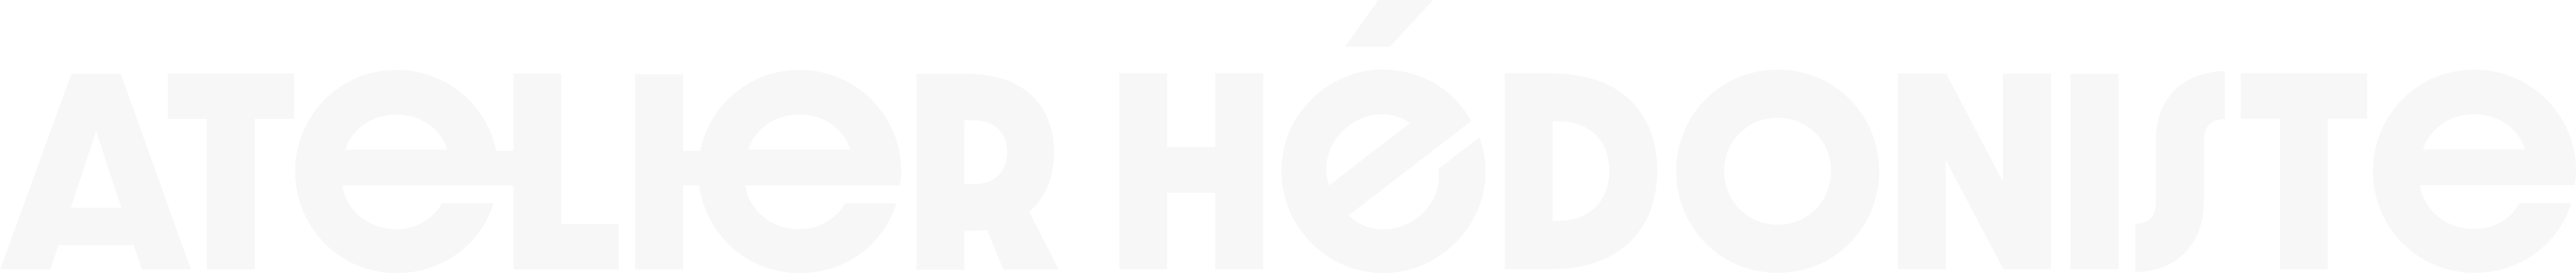 Atelier Hédoniste Logo